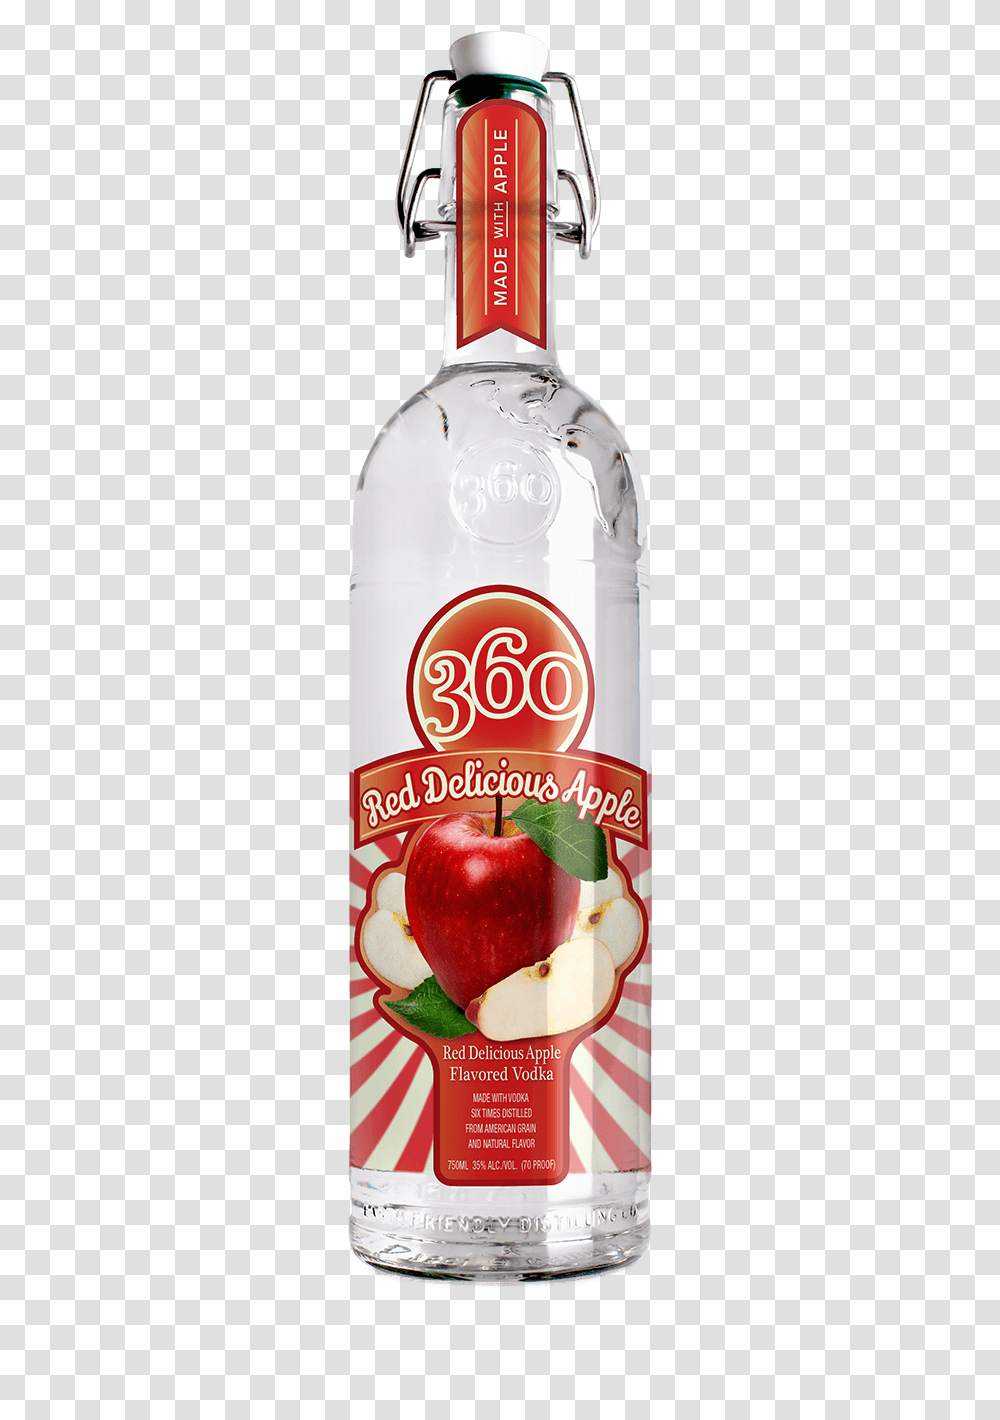 Red Delicious Apple Flavored Vodka 360 Red Delicious Apple Vodka, Beverage, Drink, Plant, Bottle Transparent Png